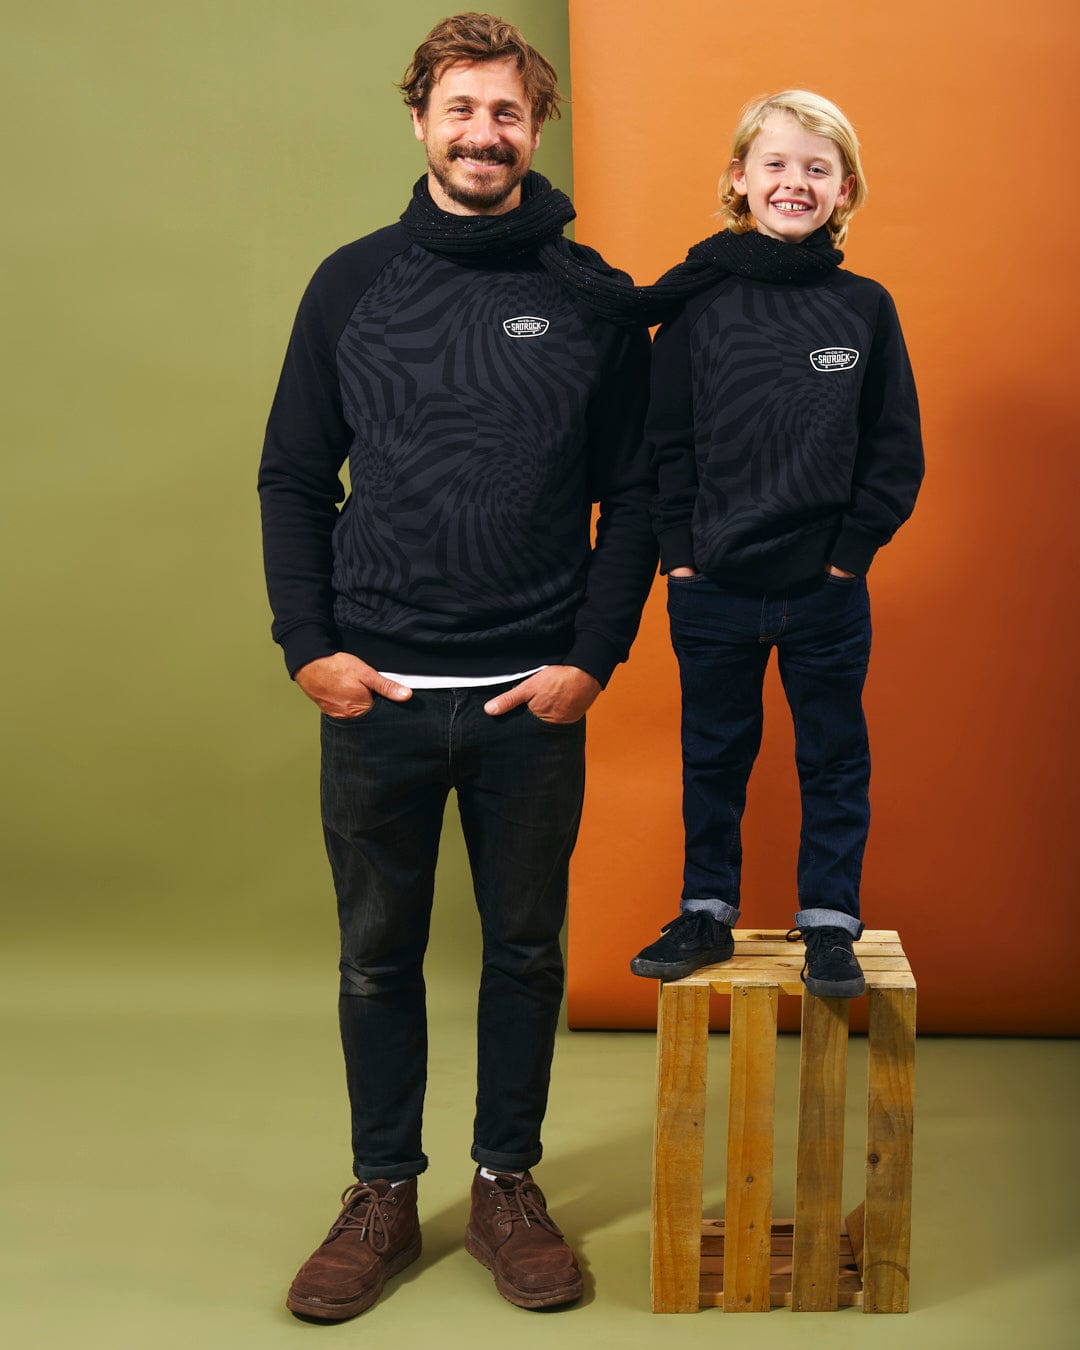 A man and a boy posing for a photo in a black sweatshirt featuring Saltrock branding. The sweatshirt is the Grip It - Kids Crew Neck Sweat - Black by Saltrock.